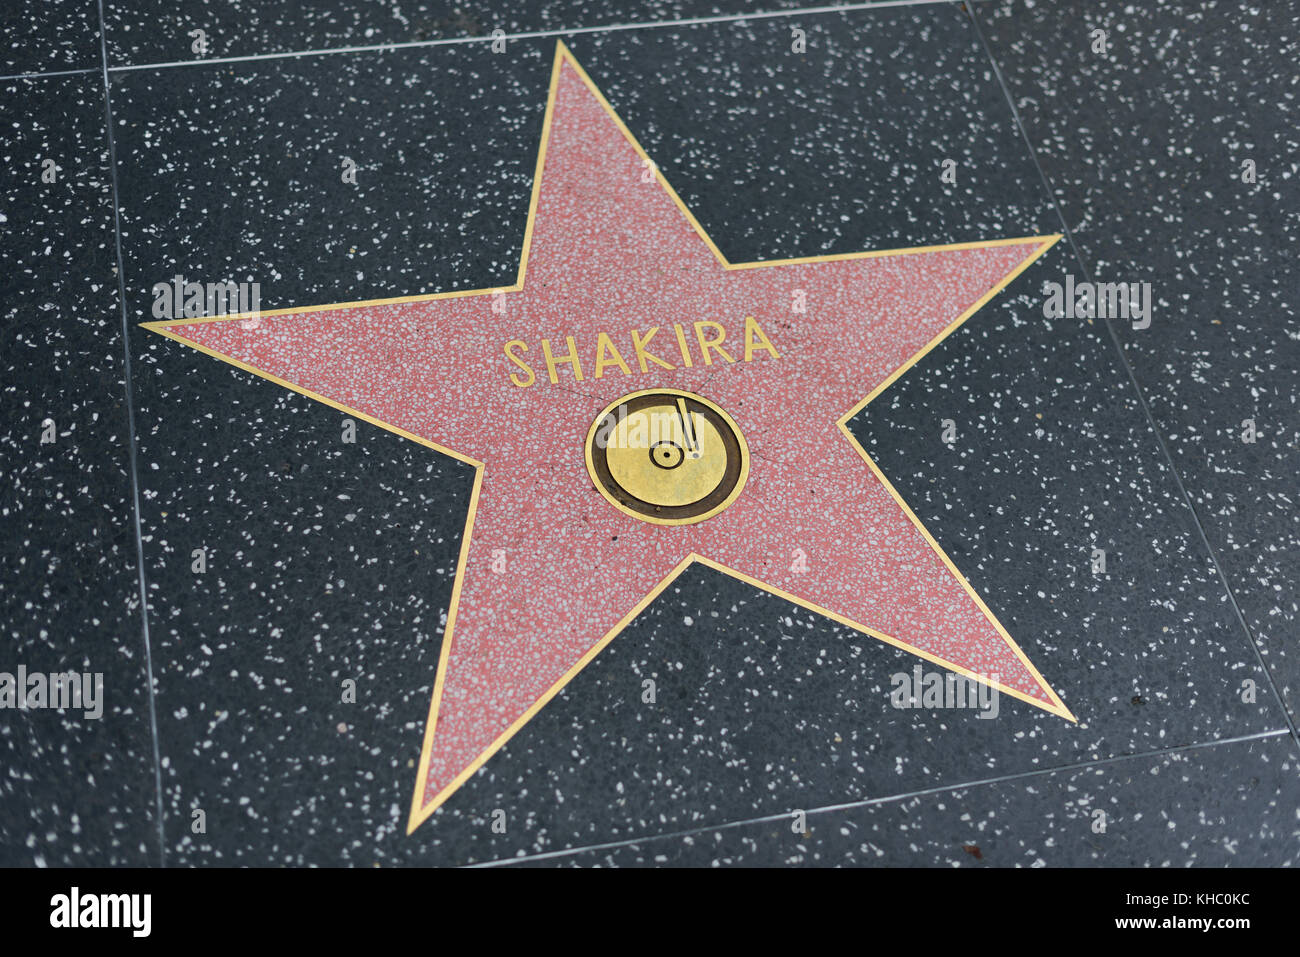 HOLLYWOOD, CA - DICEMBRE 06: Shakira stella sulla Hollywood Walk of Fame a Hollywood, California il 6 dicembre 2016. Foto Stock